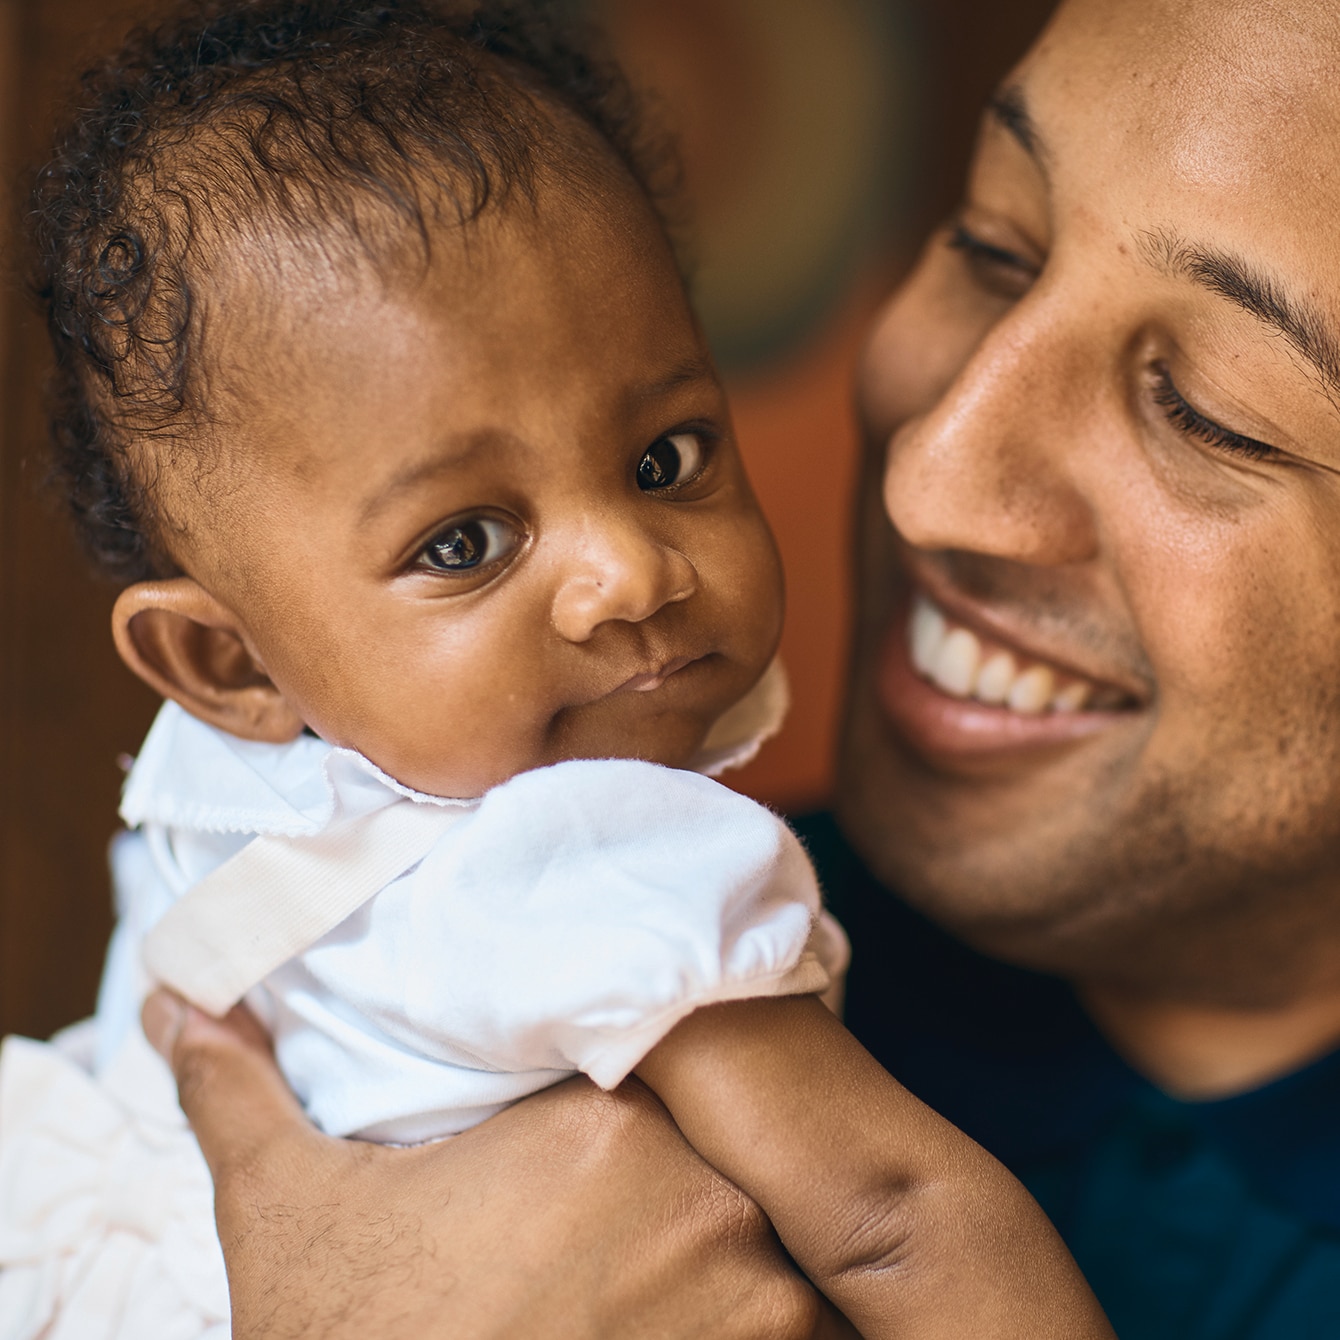 Dove Men+Care paternity leave benefits